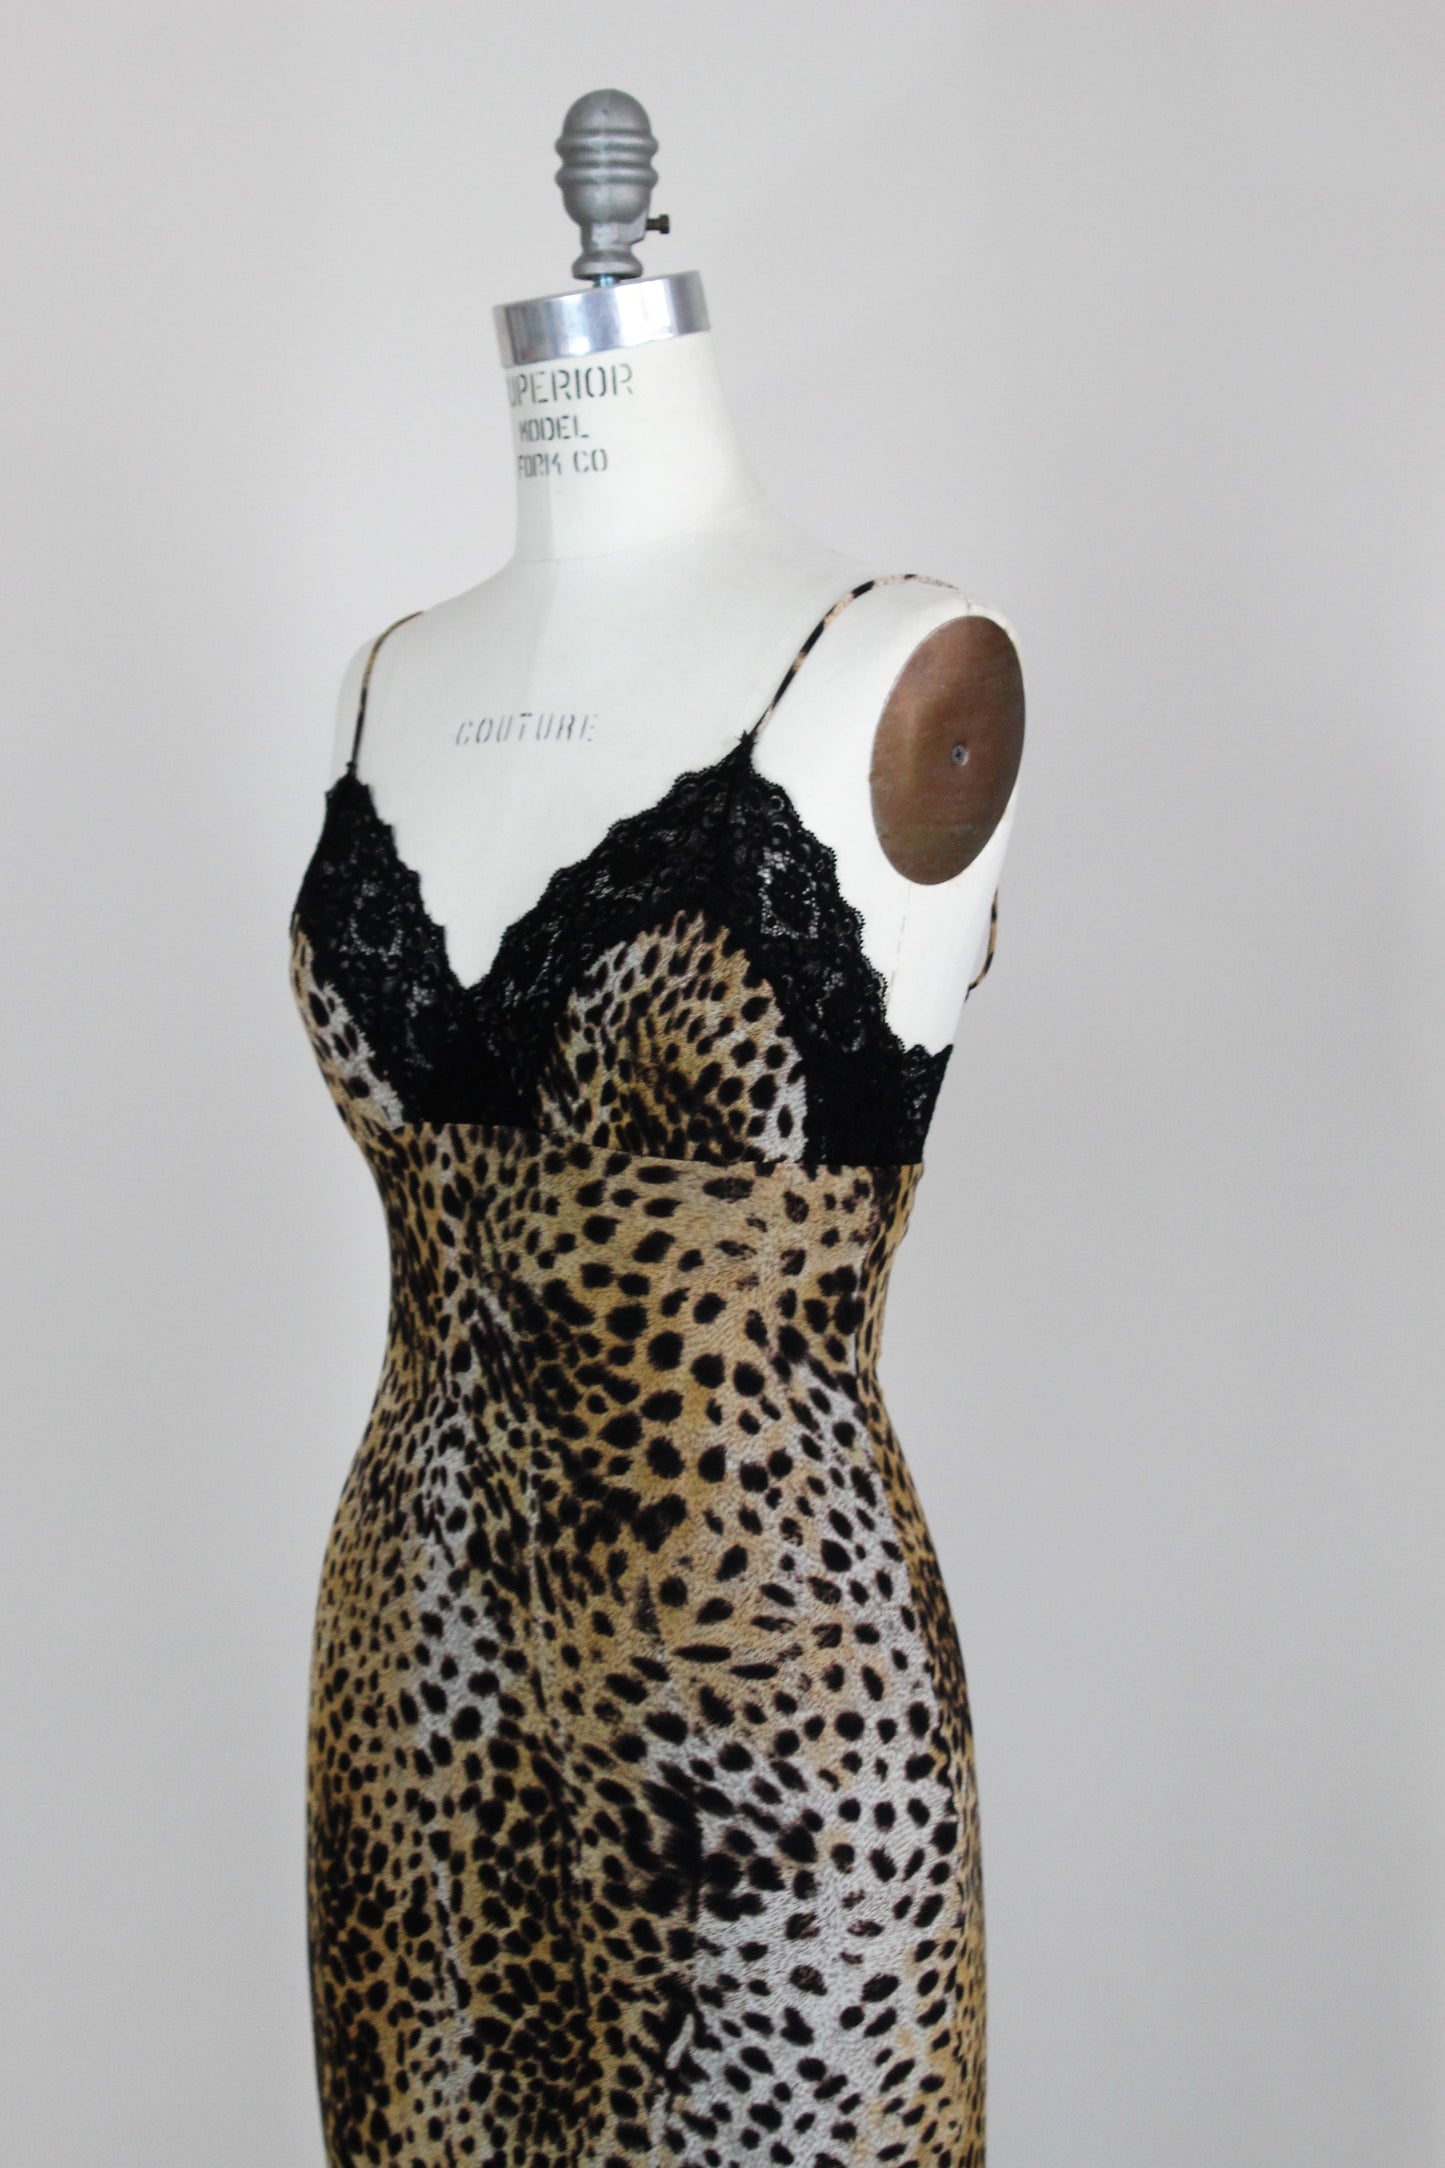 Betsey Johonson Dress In A Leopard or Cheetah Print